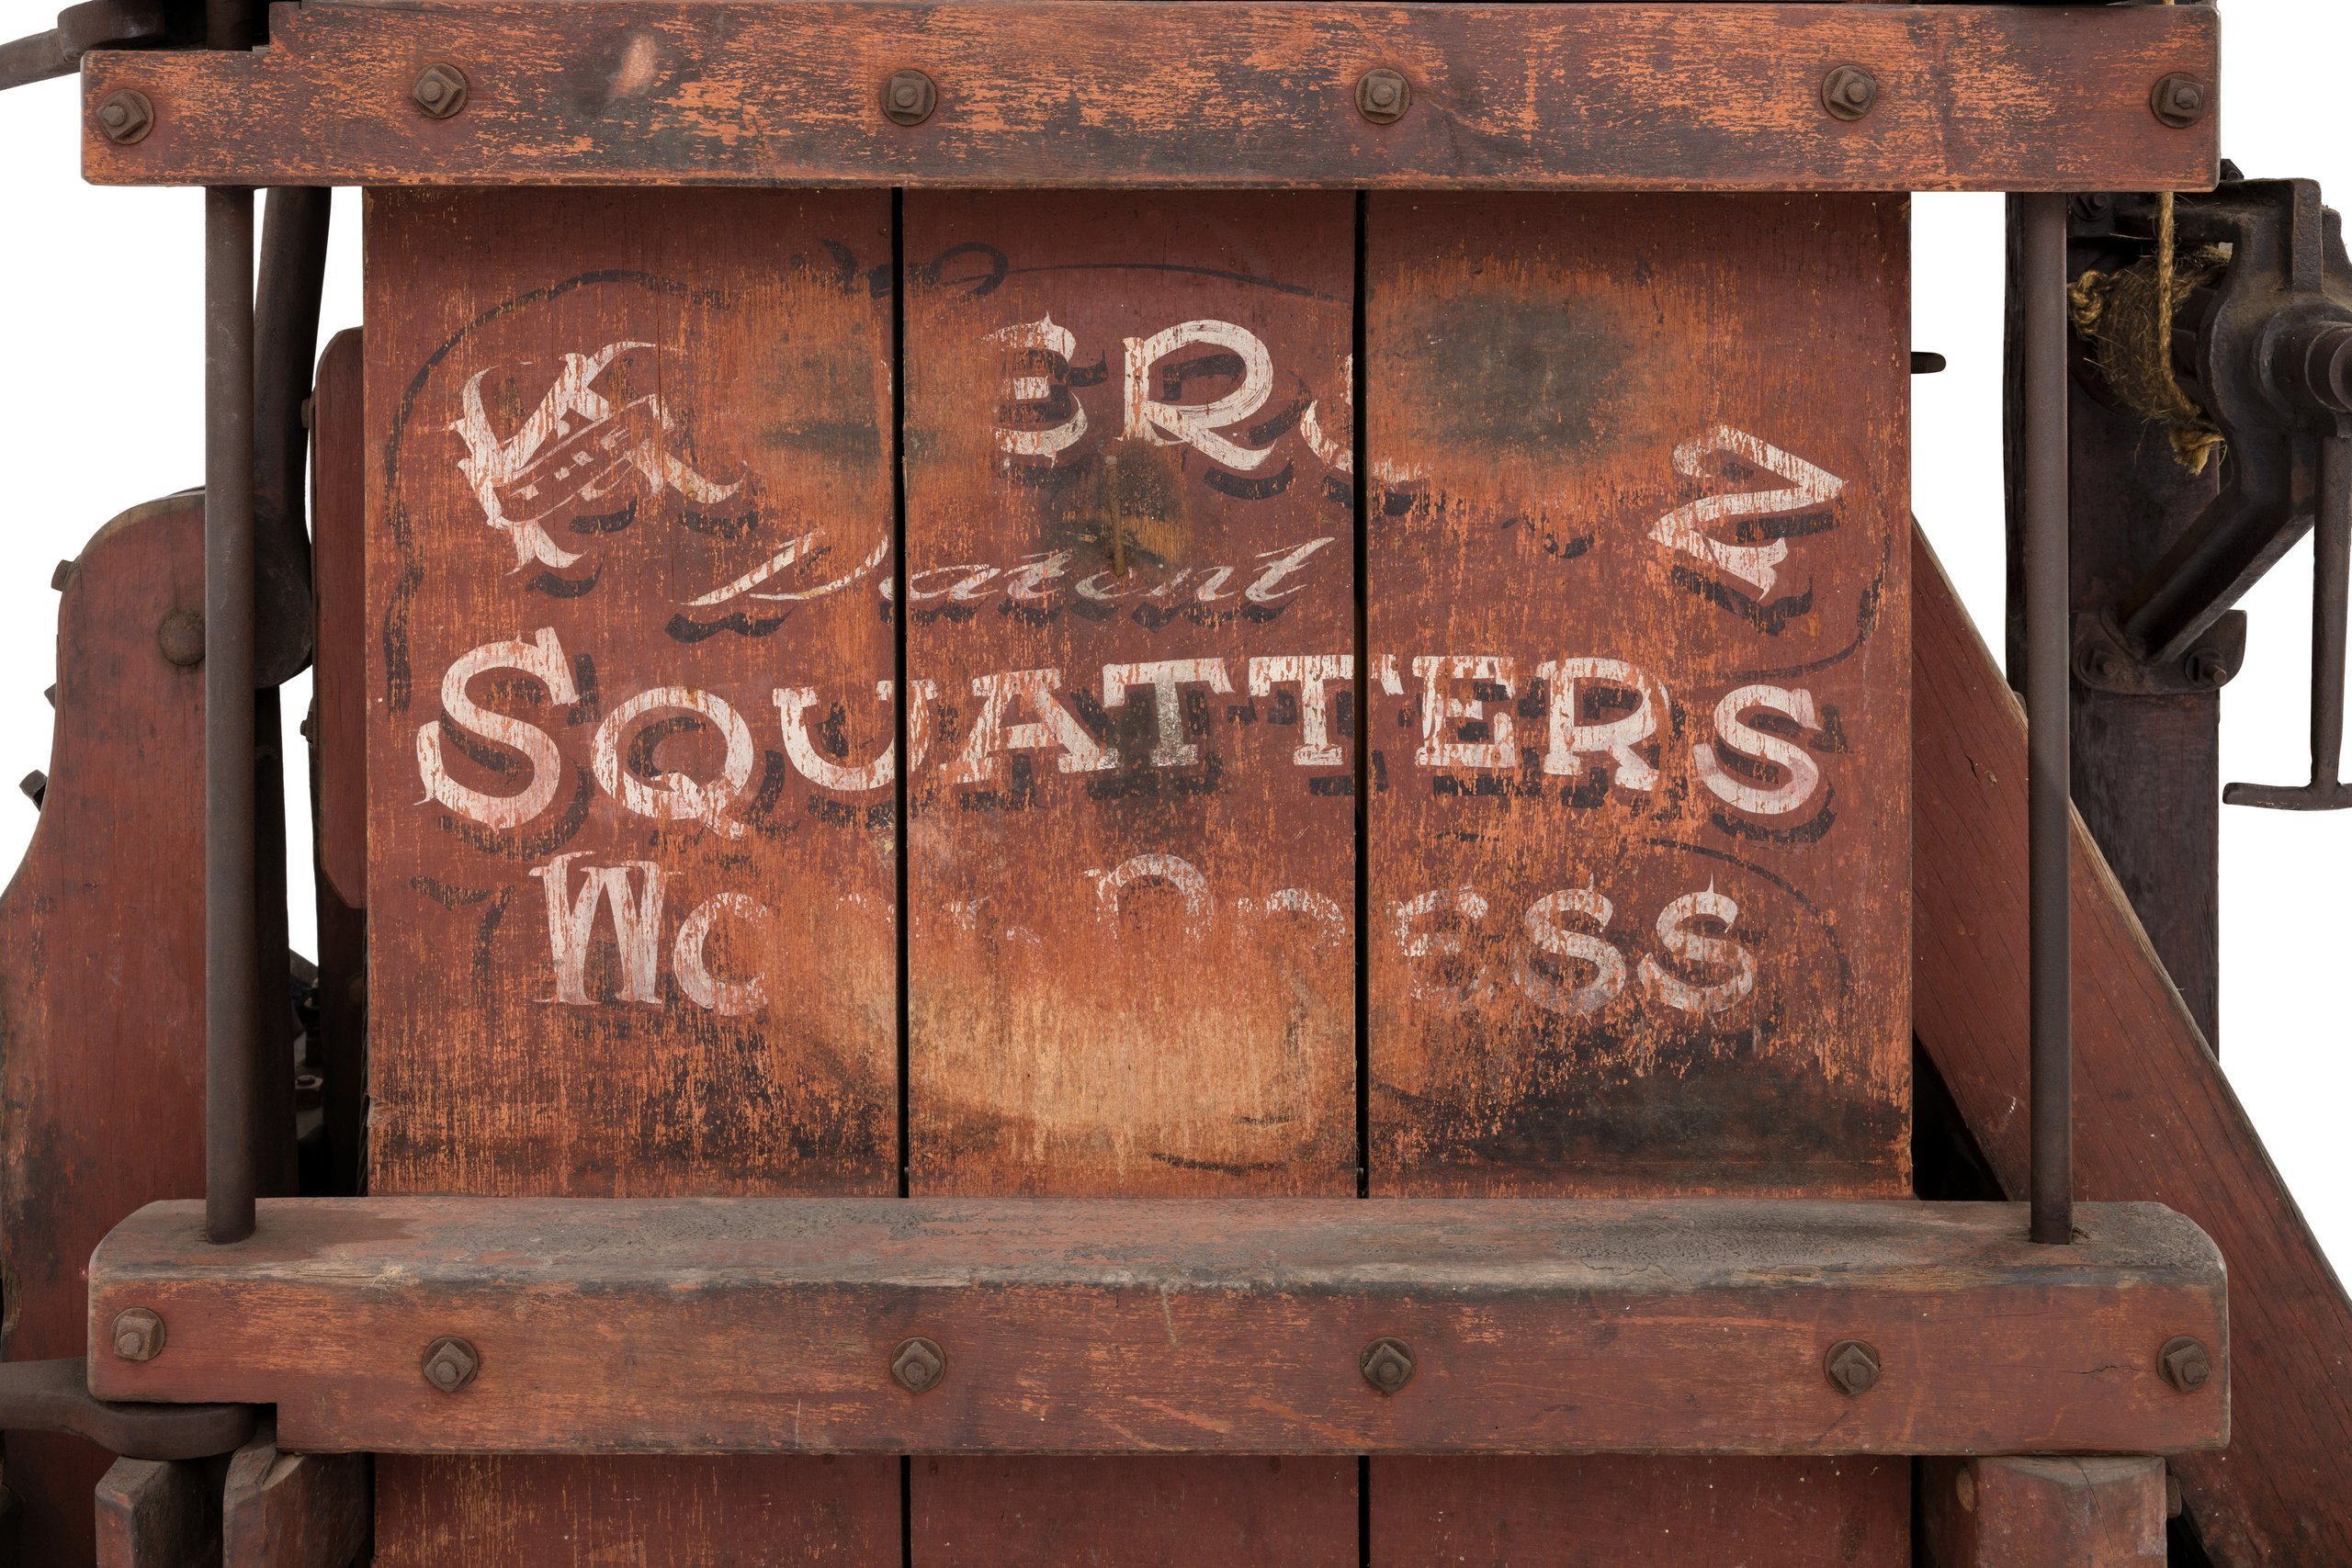 'Koerstz Squatters' wool press